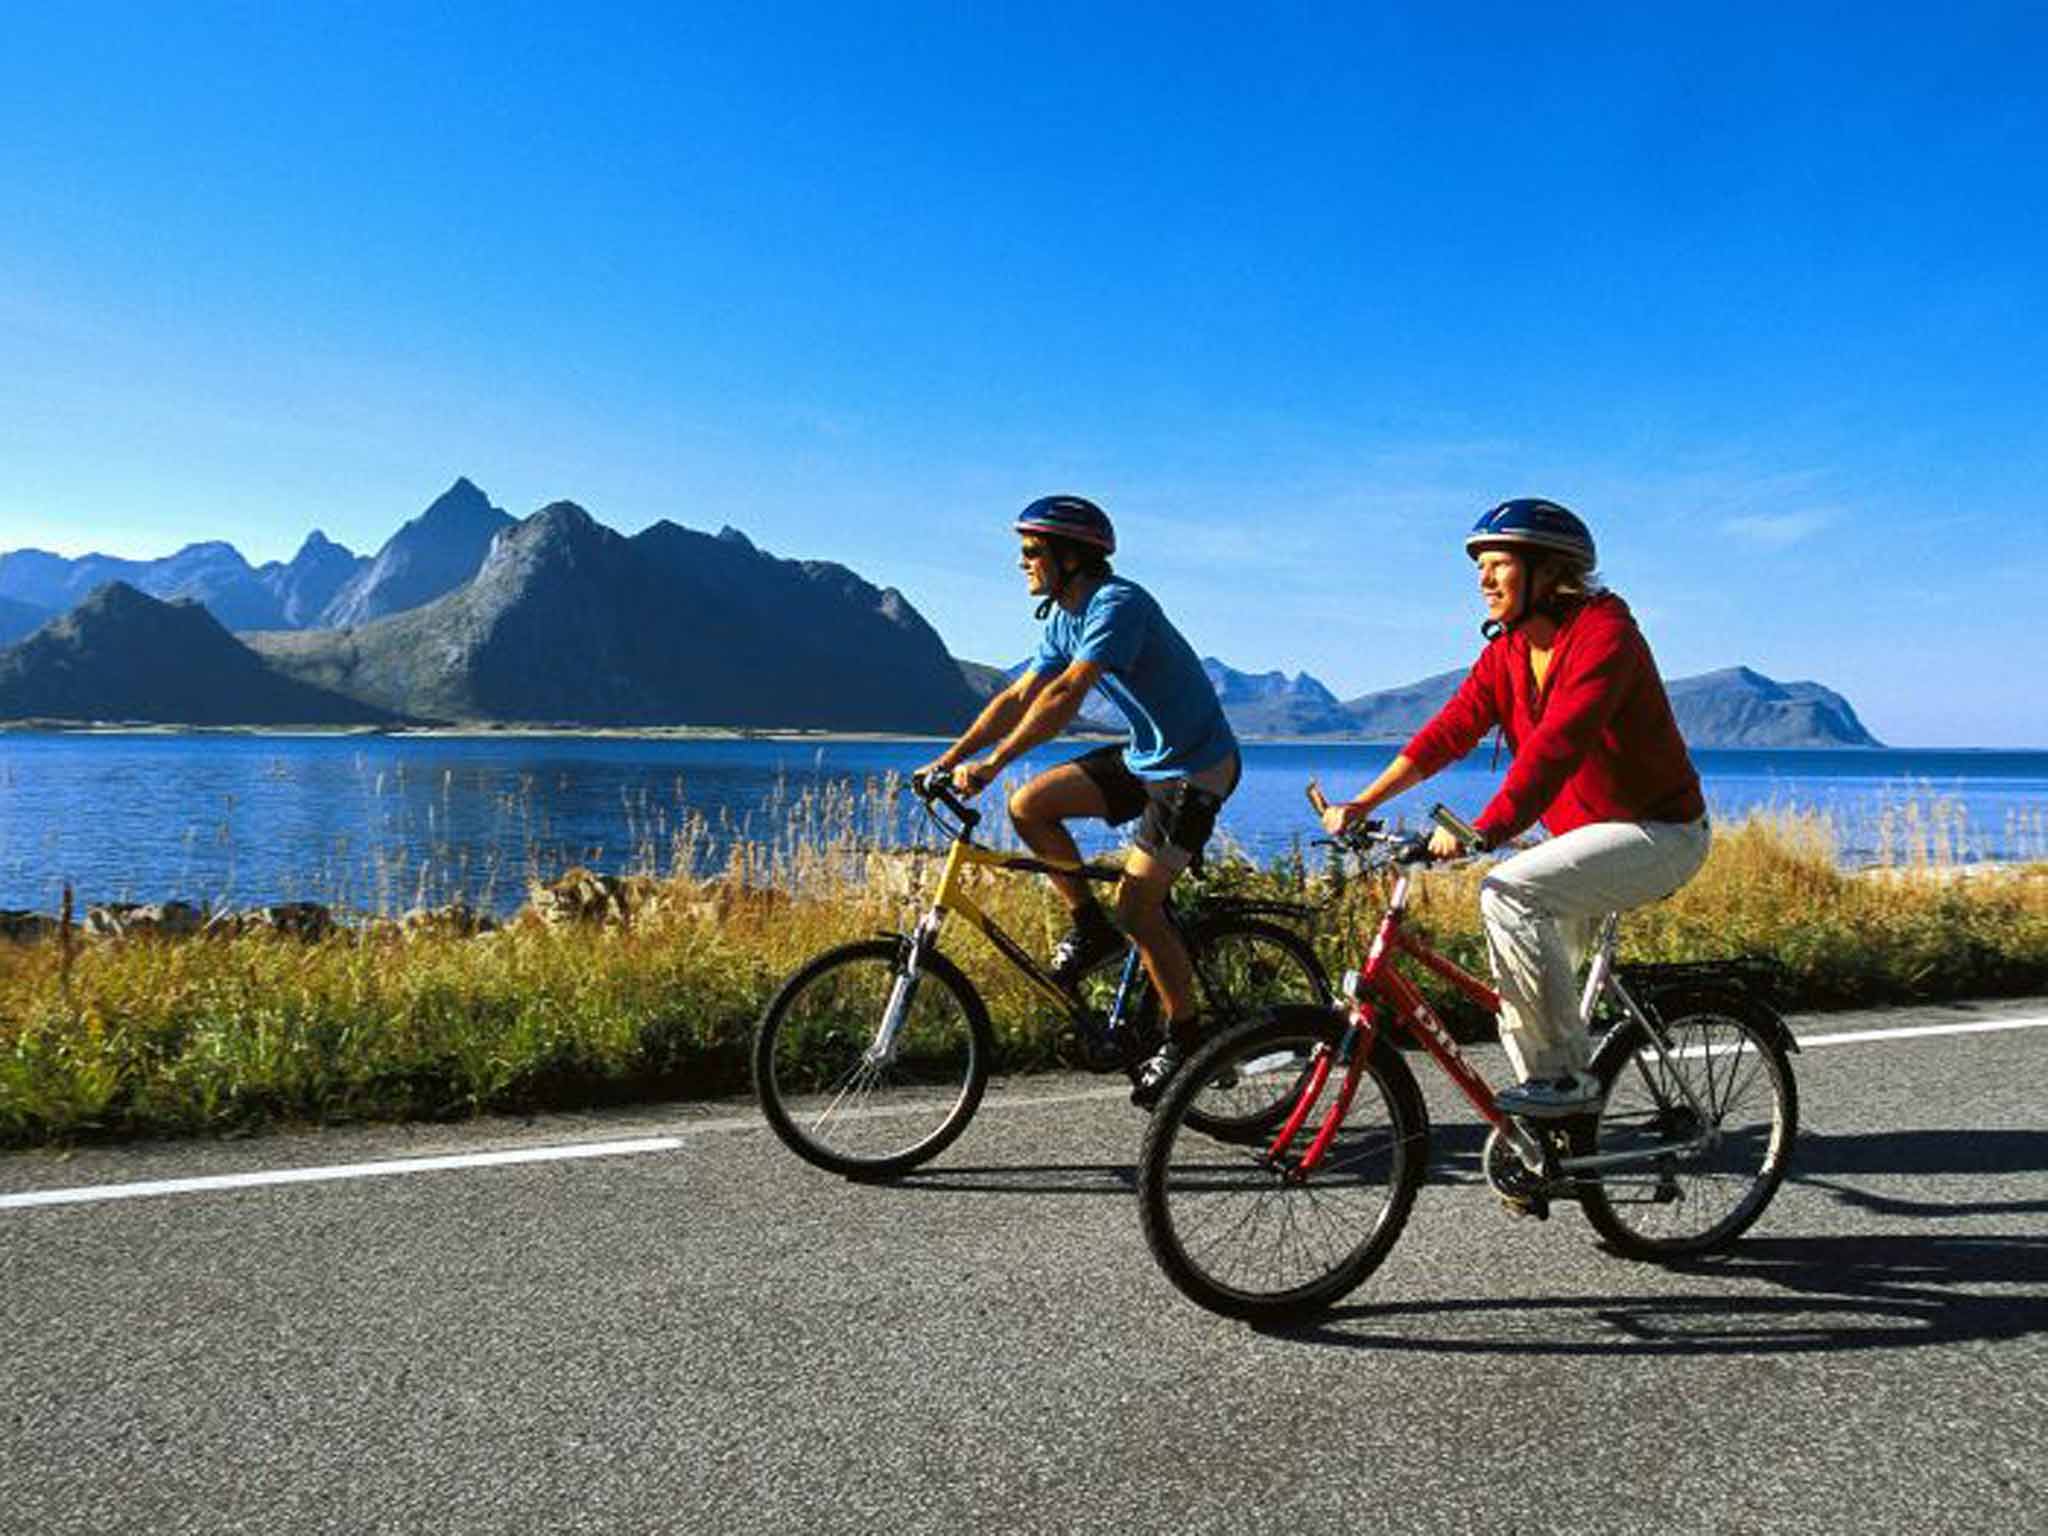 Поездка прокат. Велодорожки в Норвегии. Катание на велосипеде. Прогулка на велосипеде. Велосипед.